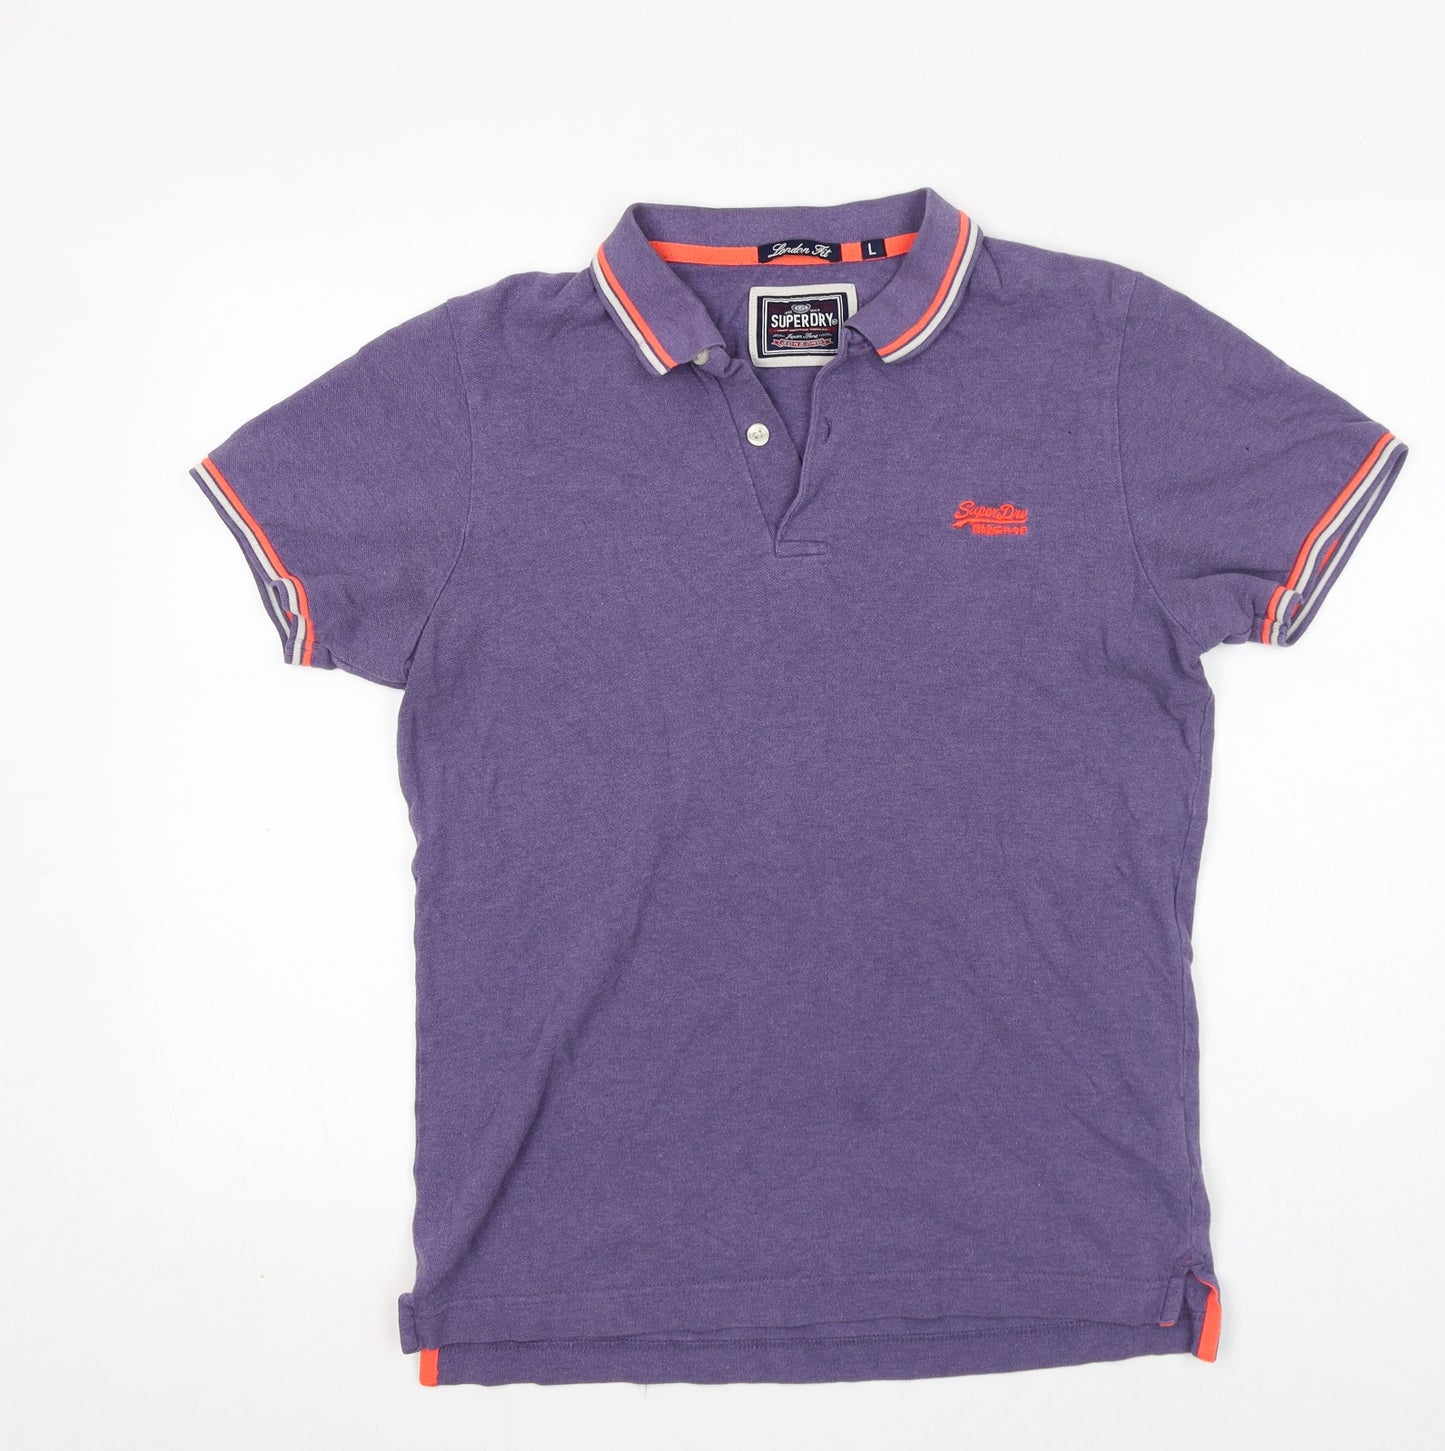 Superdry Mens Purple 100% Cotton Polo Size L Collared Button